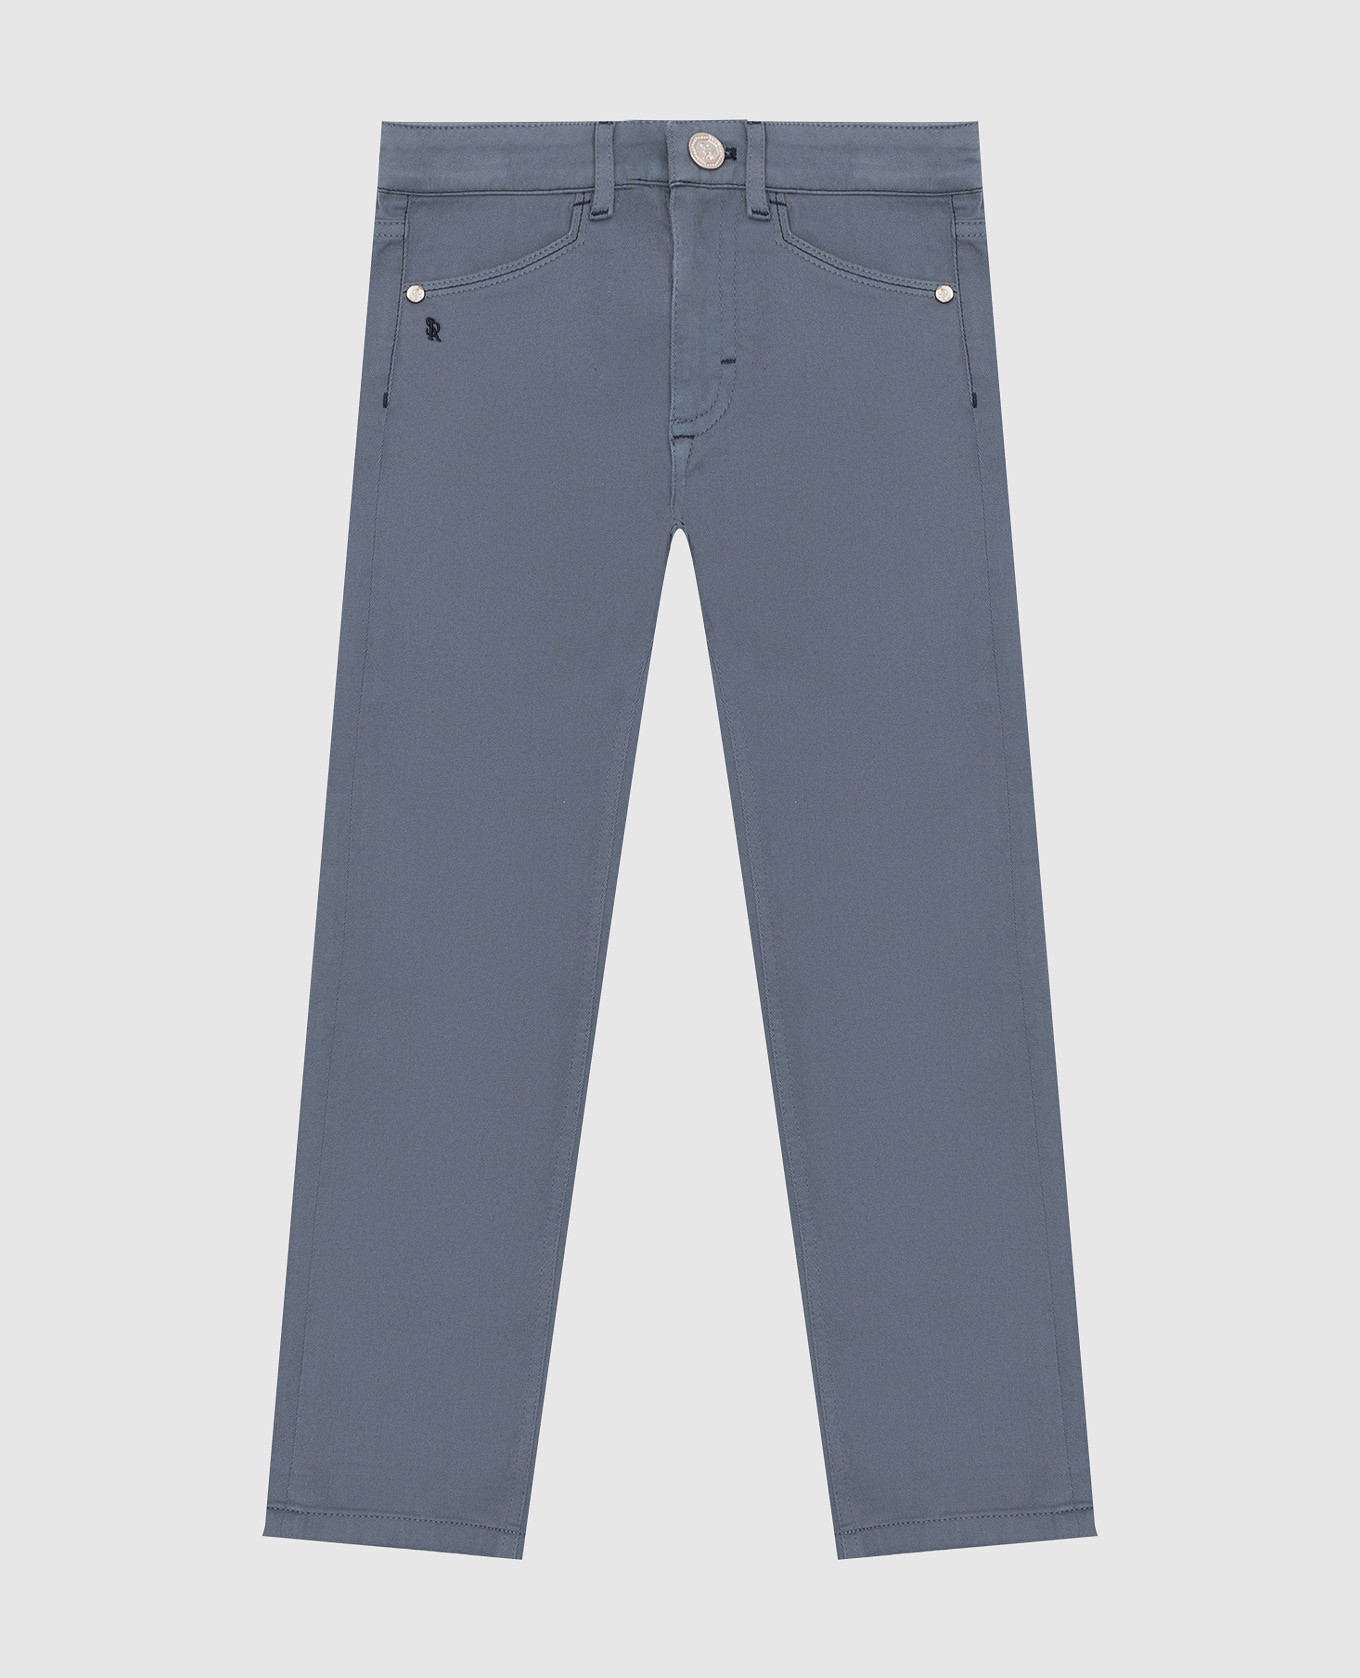 Children's gray trousers